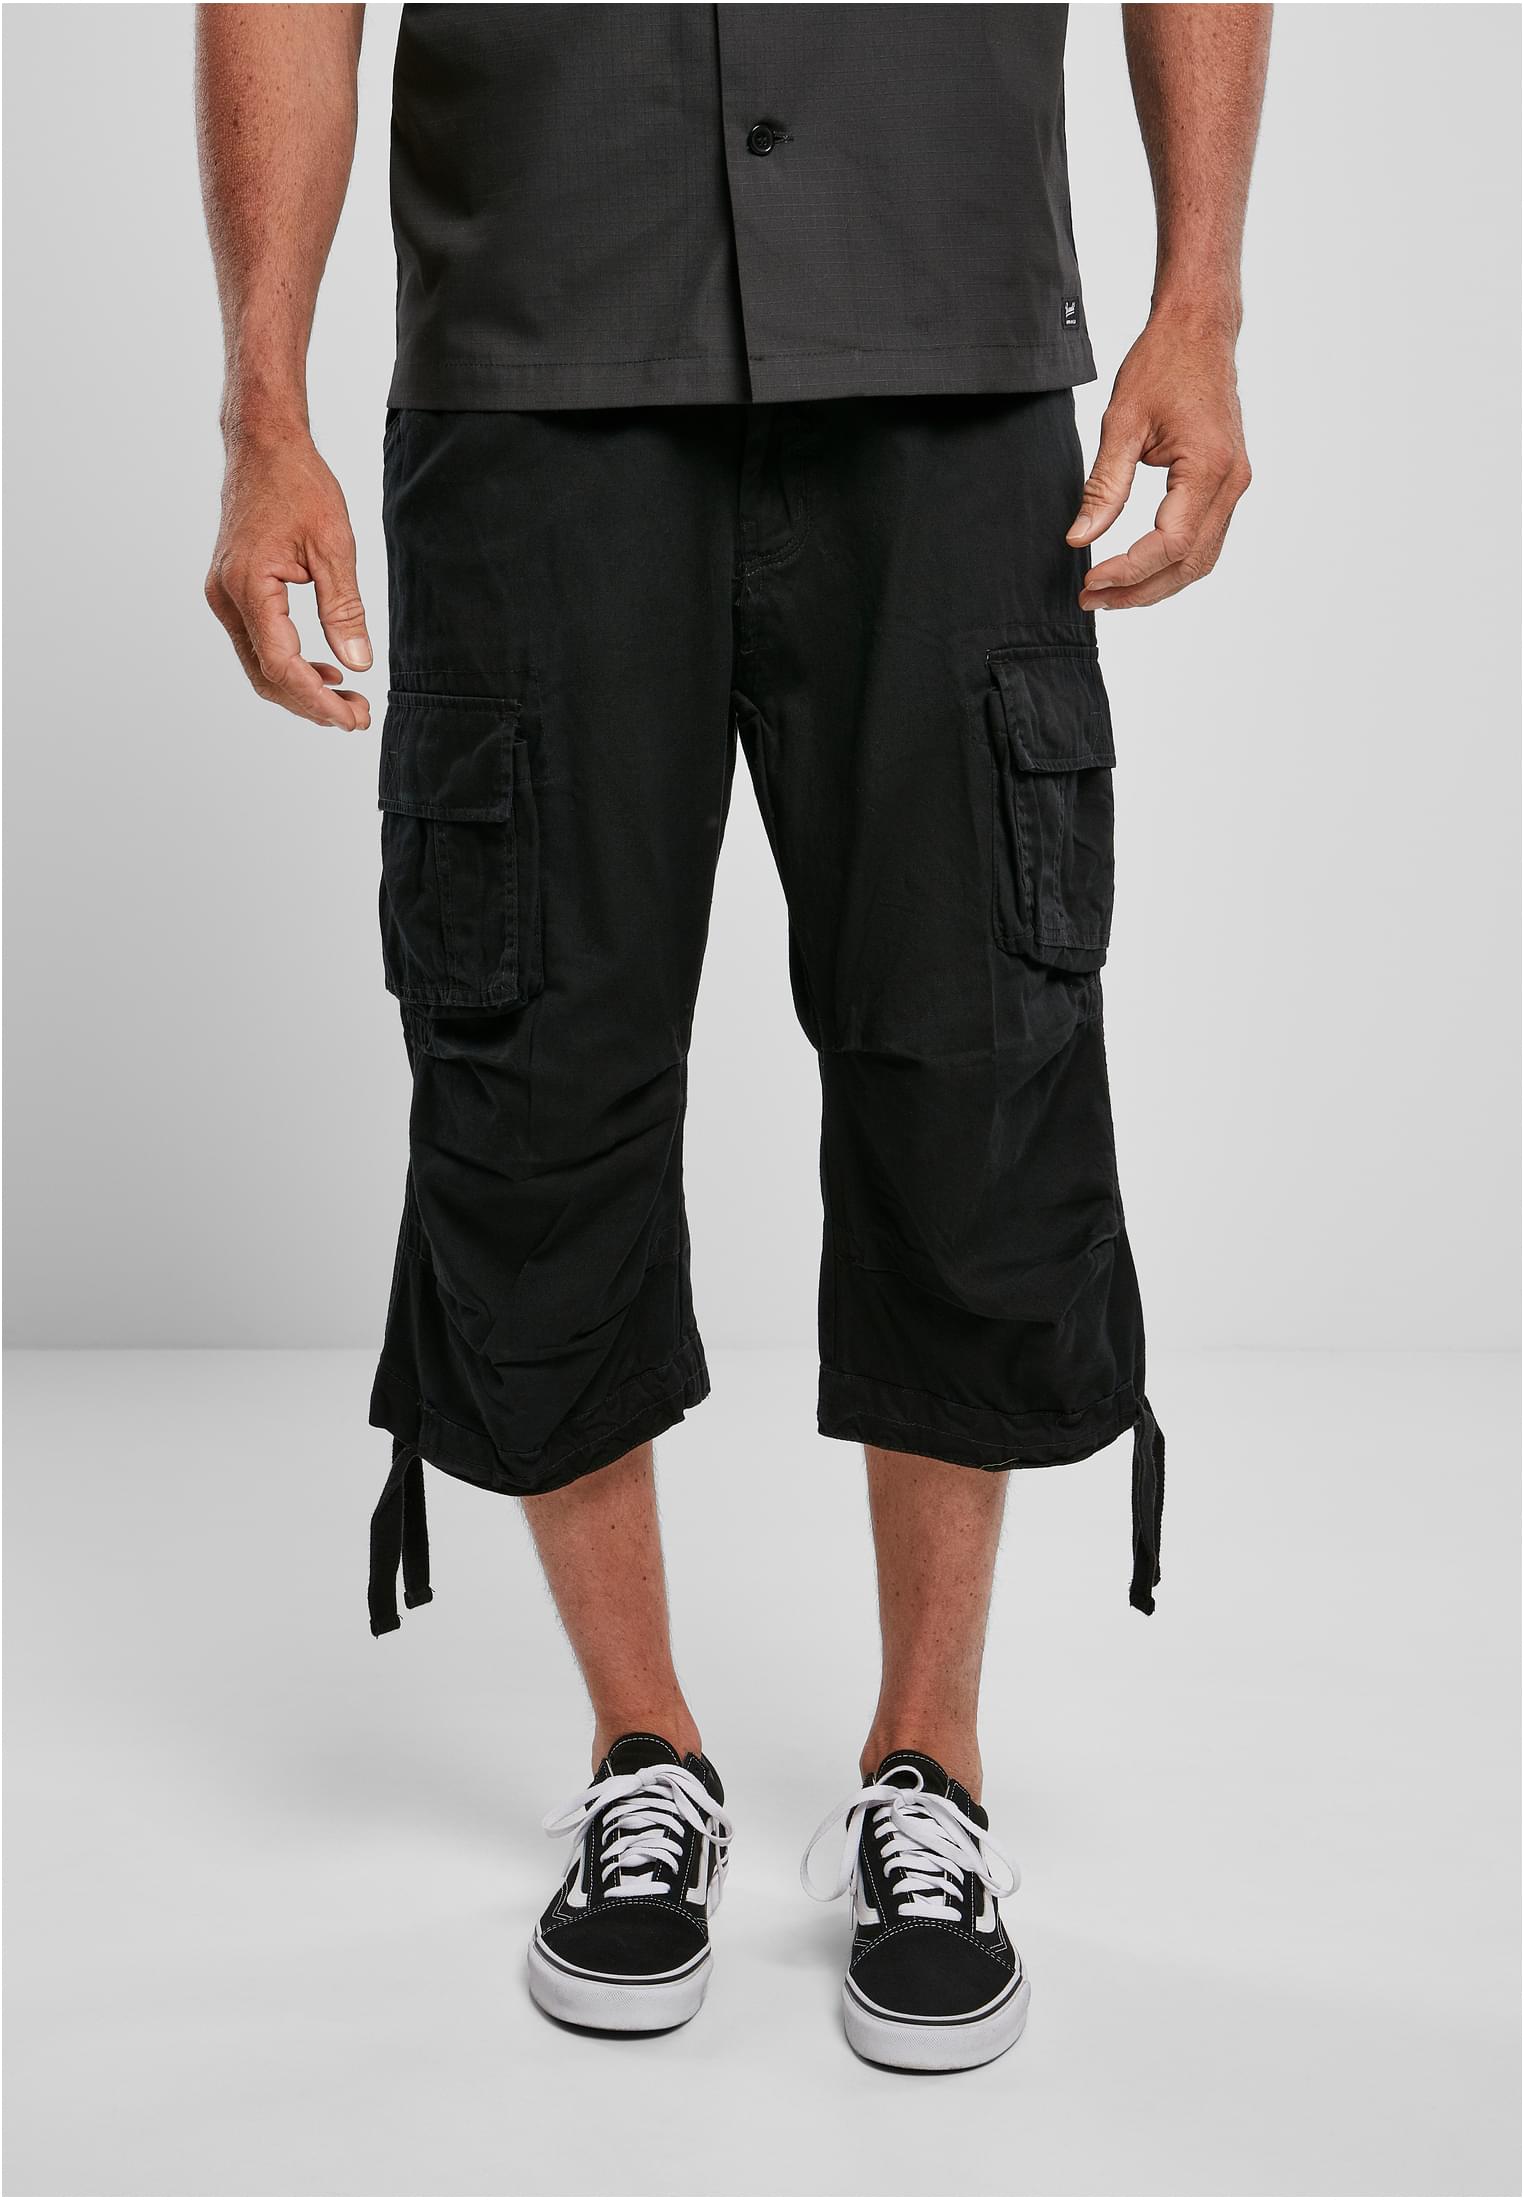 Los Angeles FC adidas Climacool Athletic Pants Men's Black/White New L -  Locker Room Direct